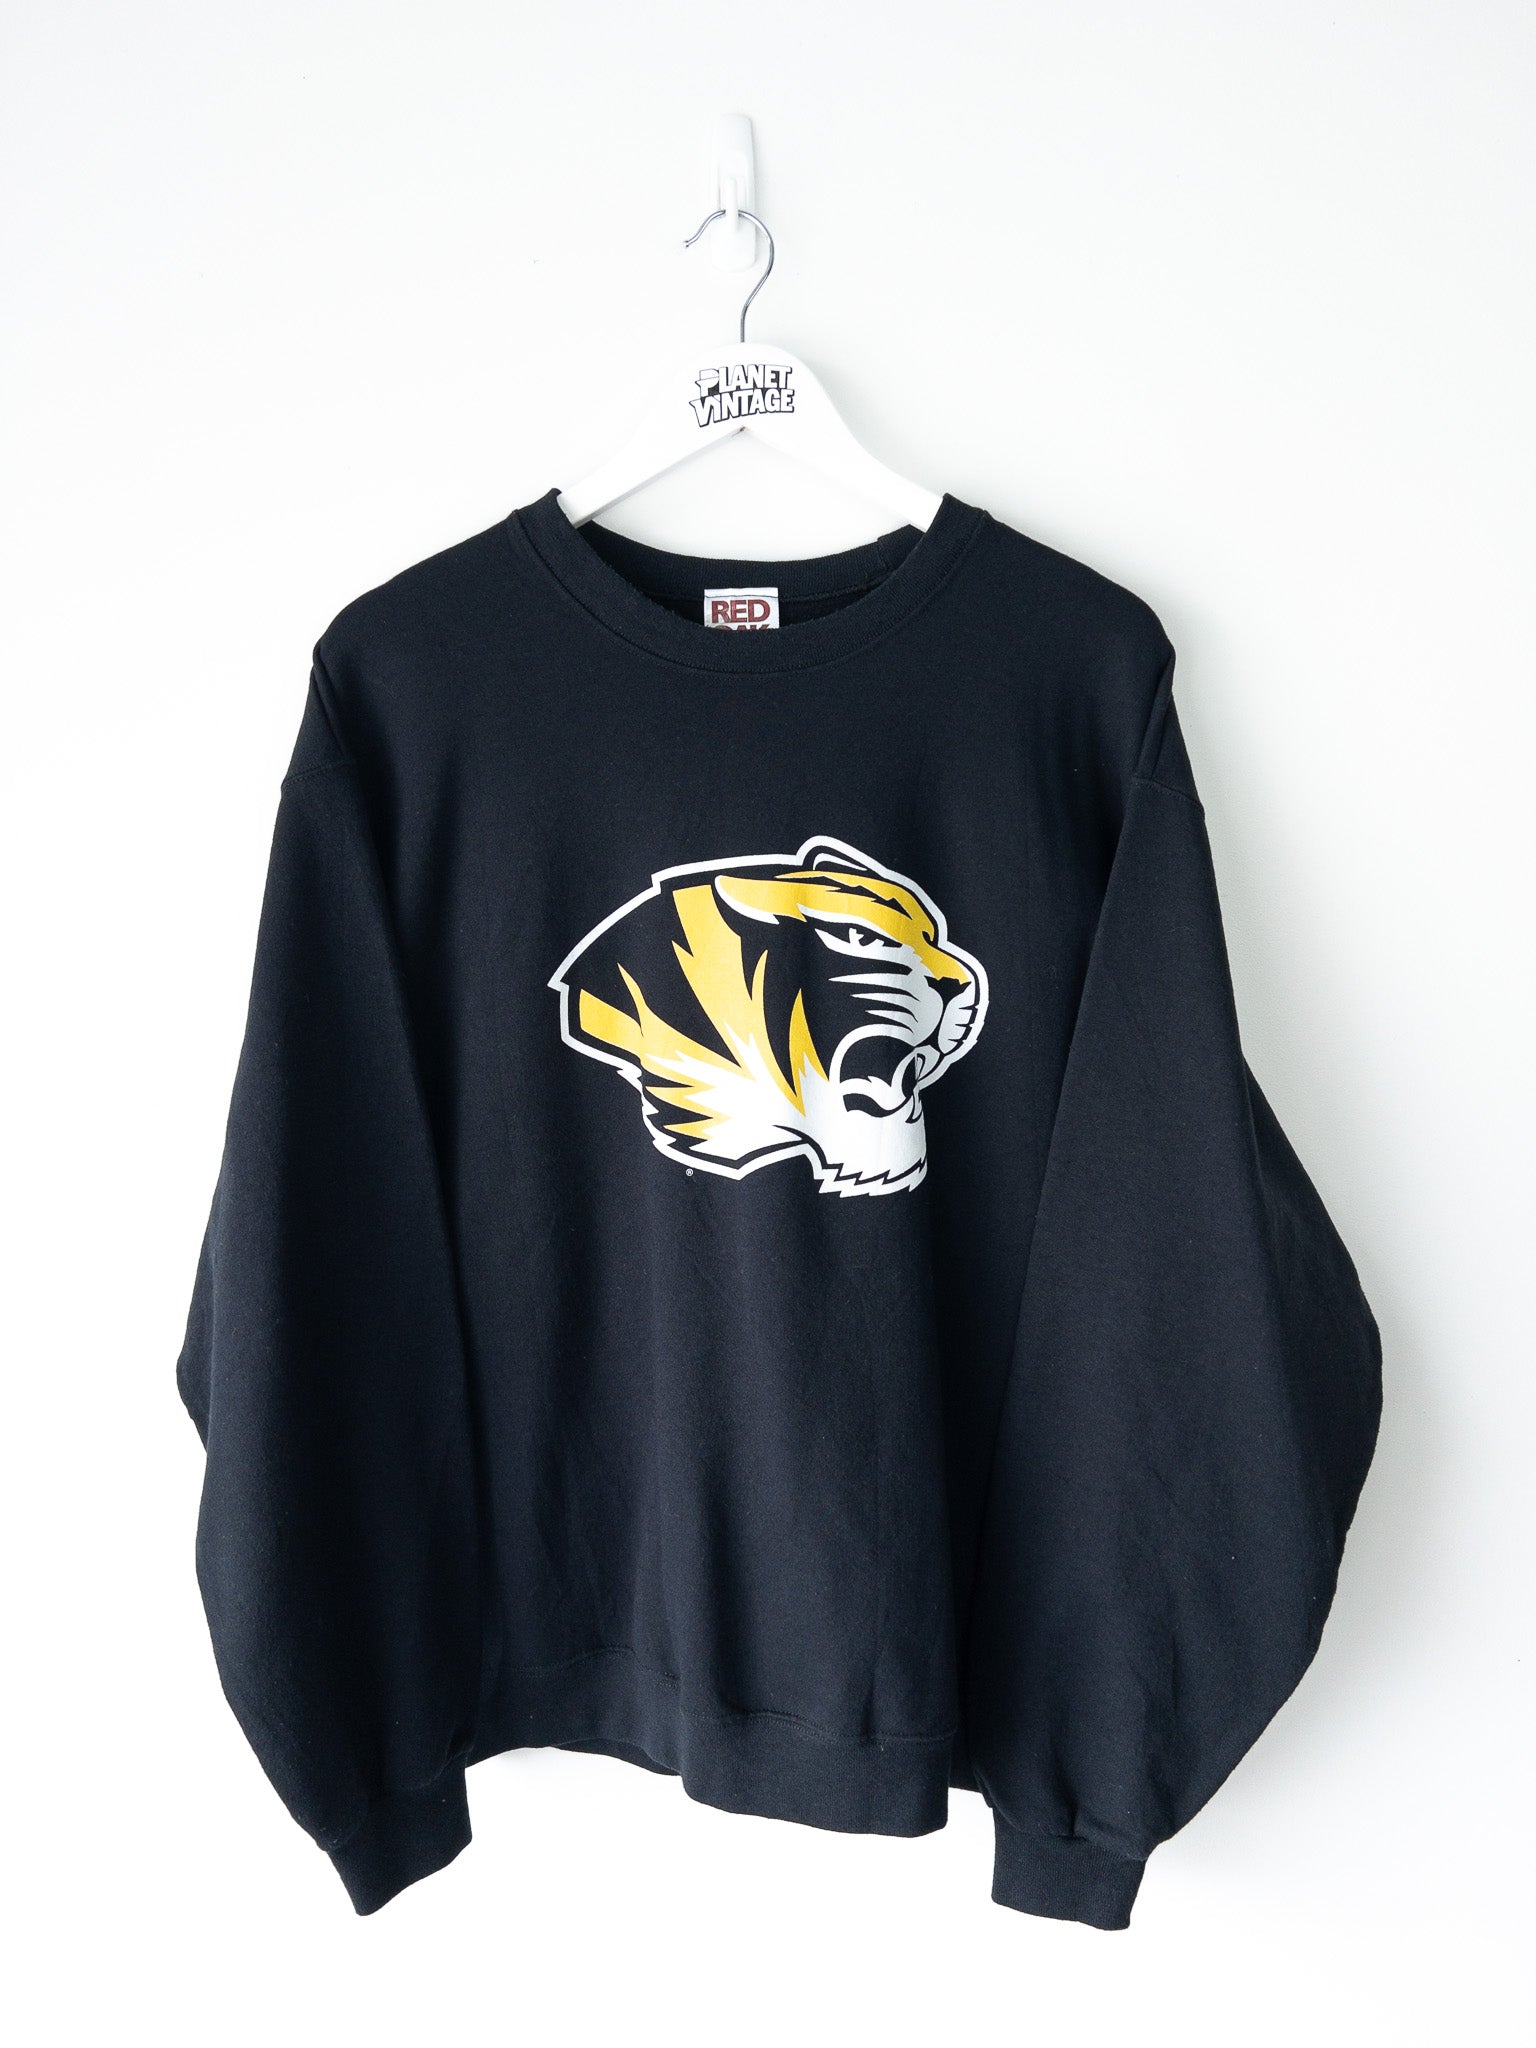 Vintage Missouri Tigers Sweatshirt (L)